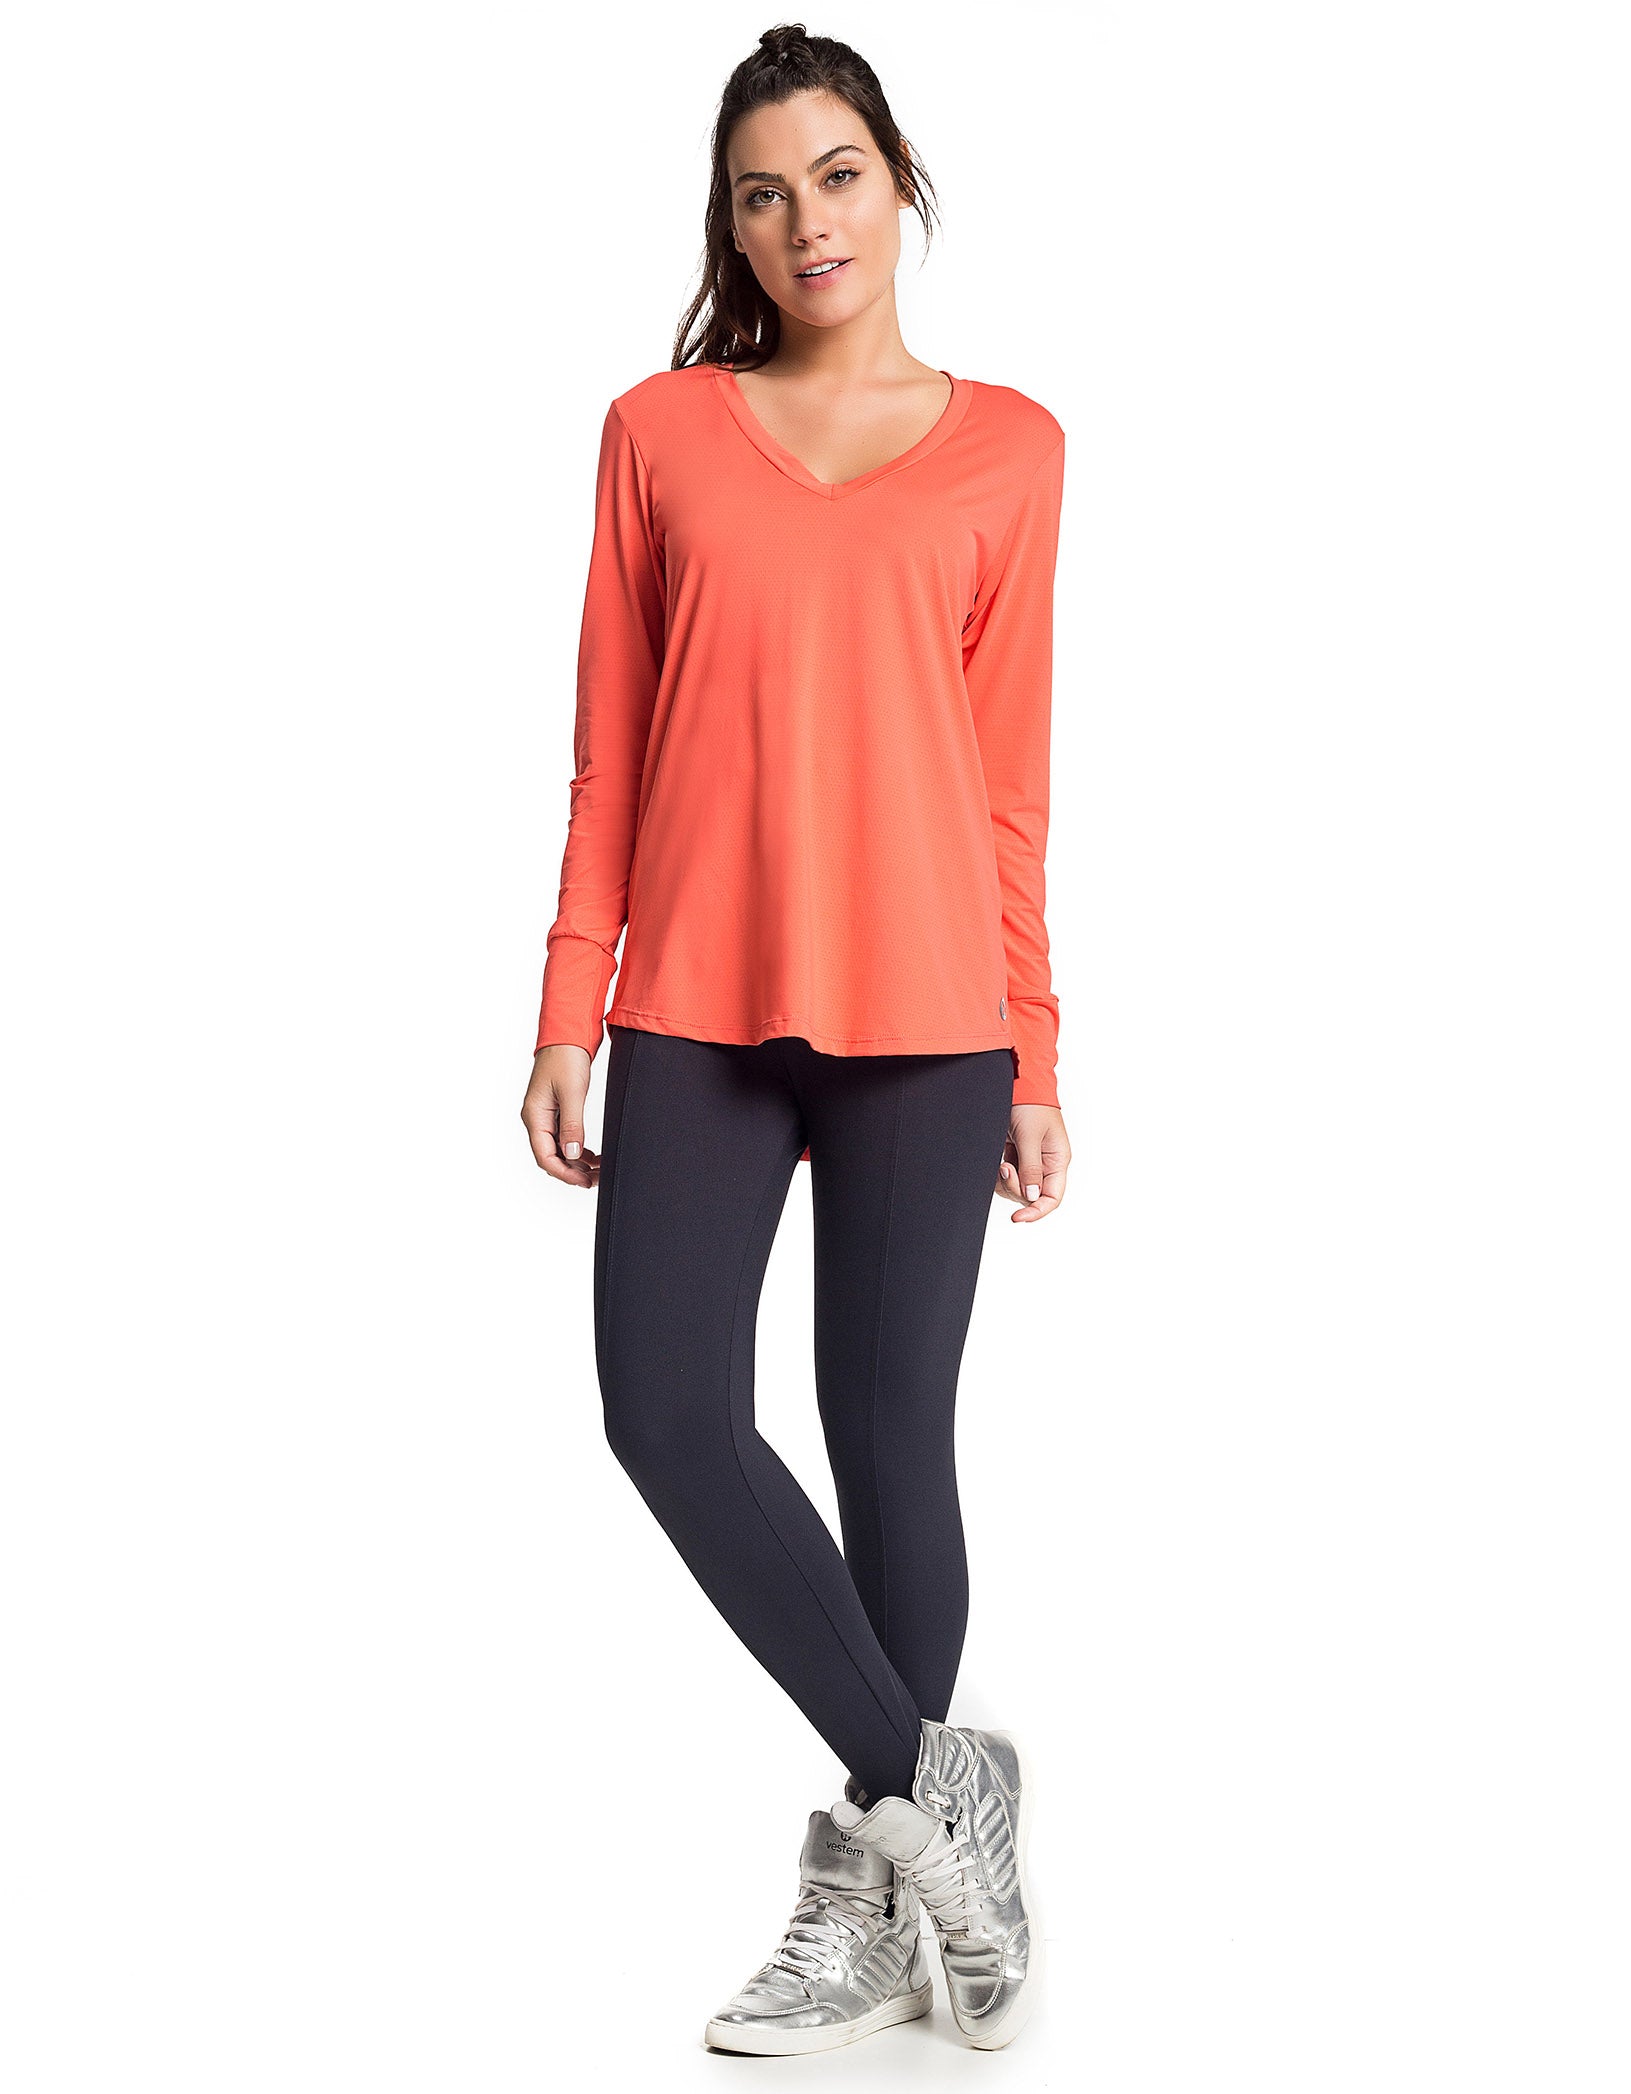 Vestem - Shirt Dry Fit Long Sleeve Janice Tabata Orange - BML16C0155